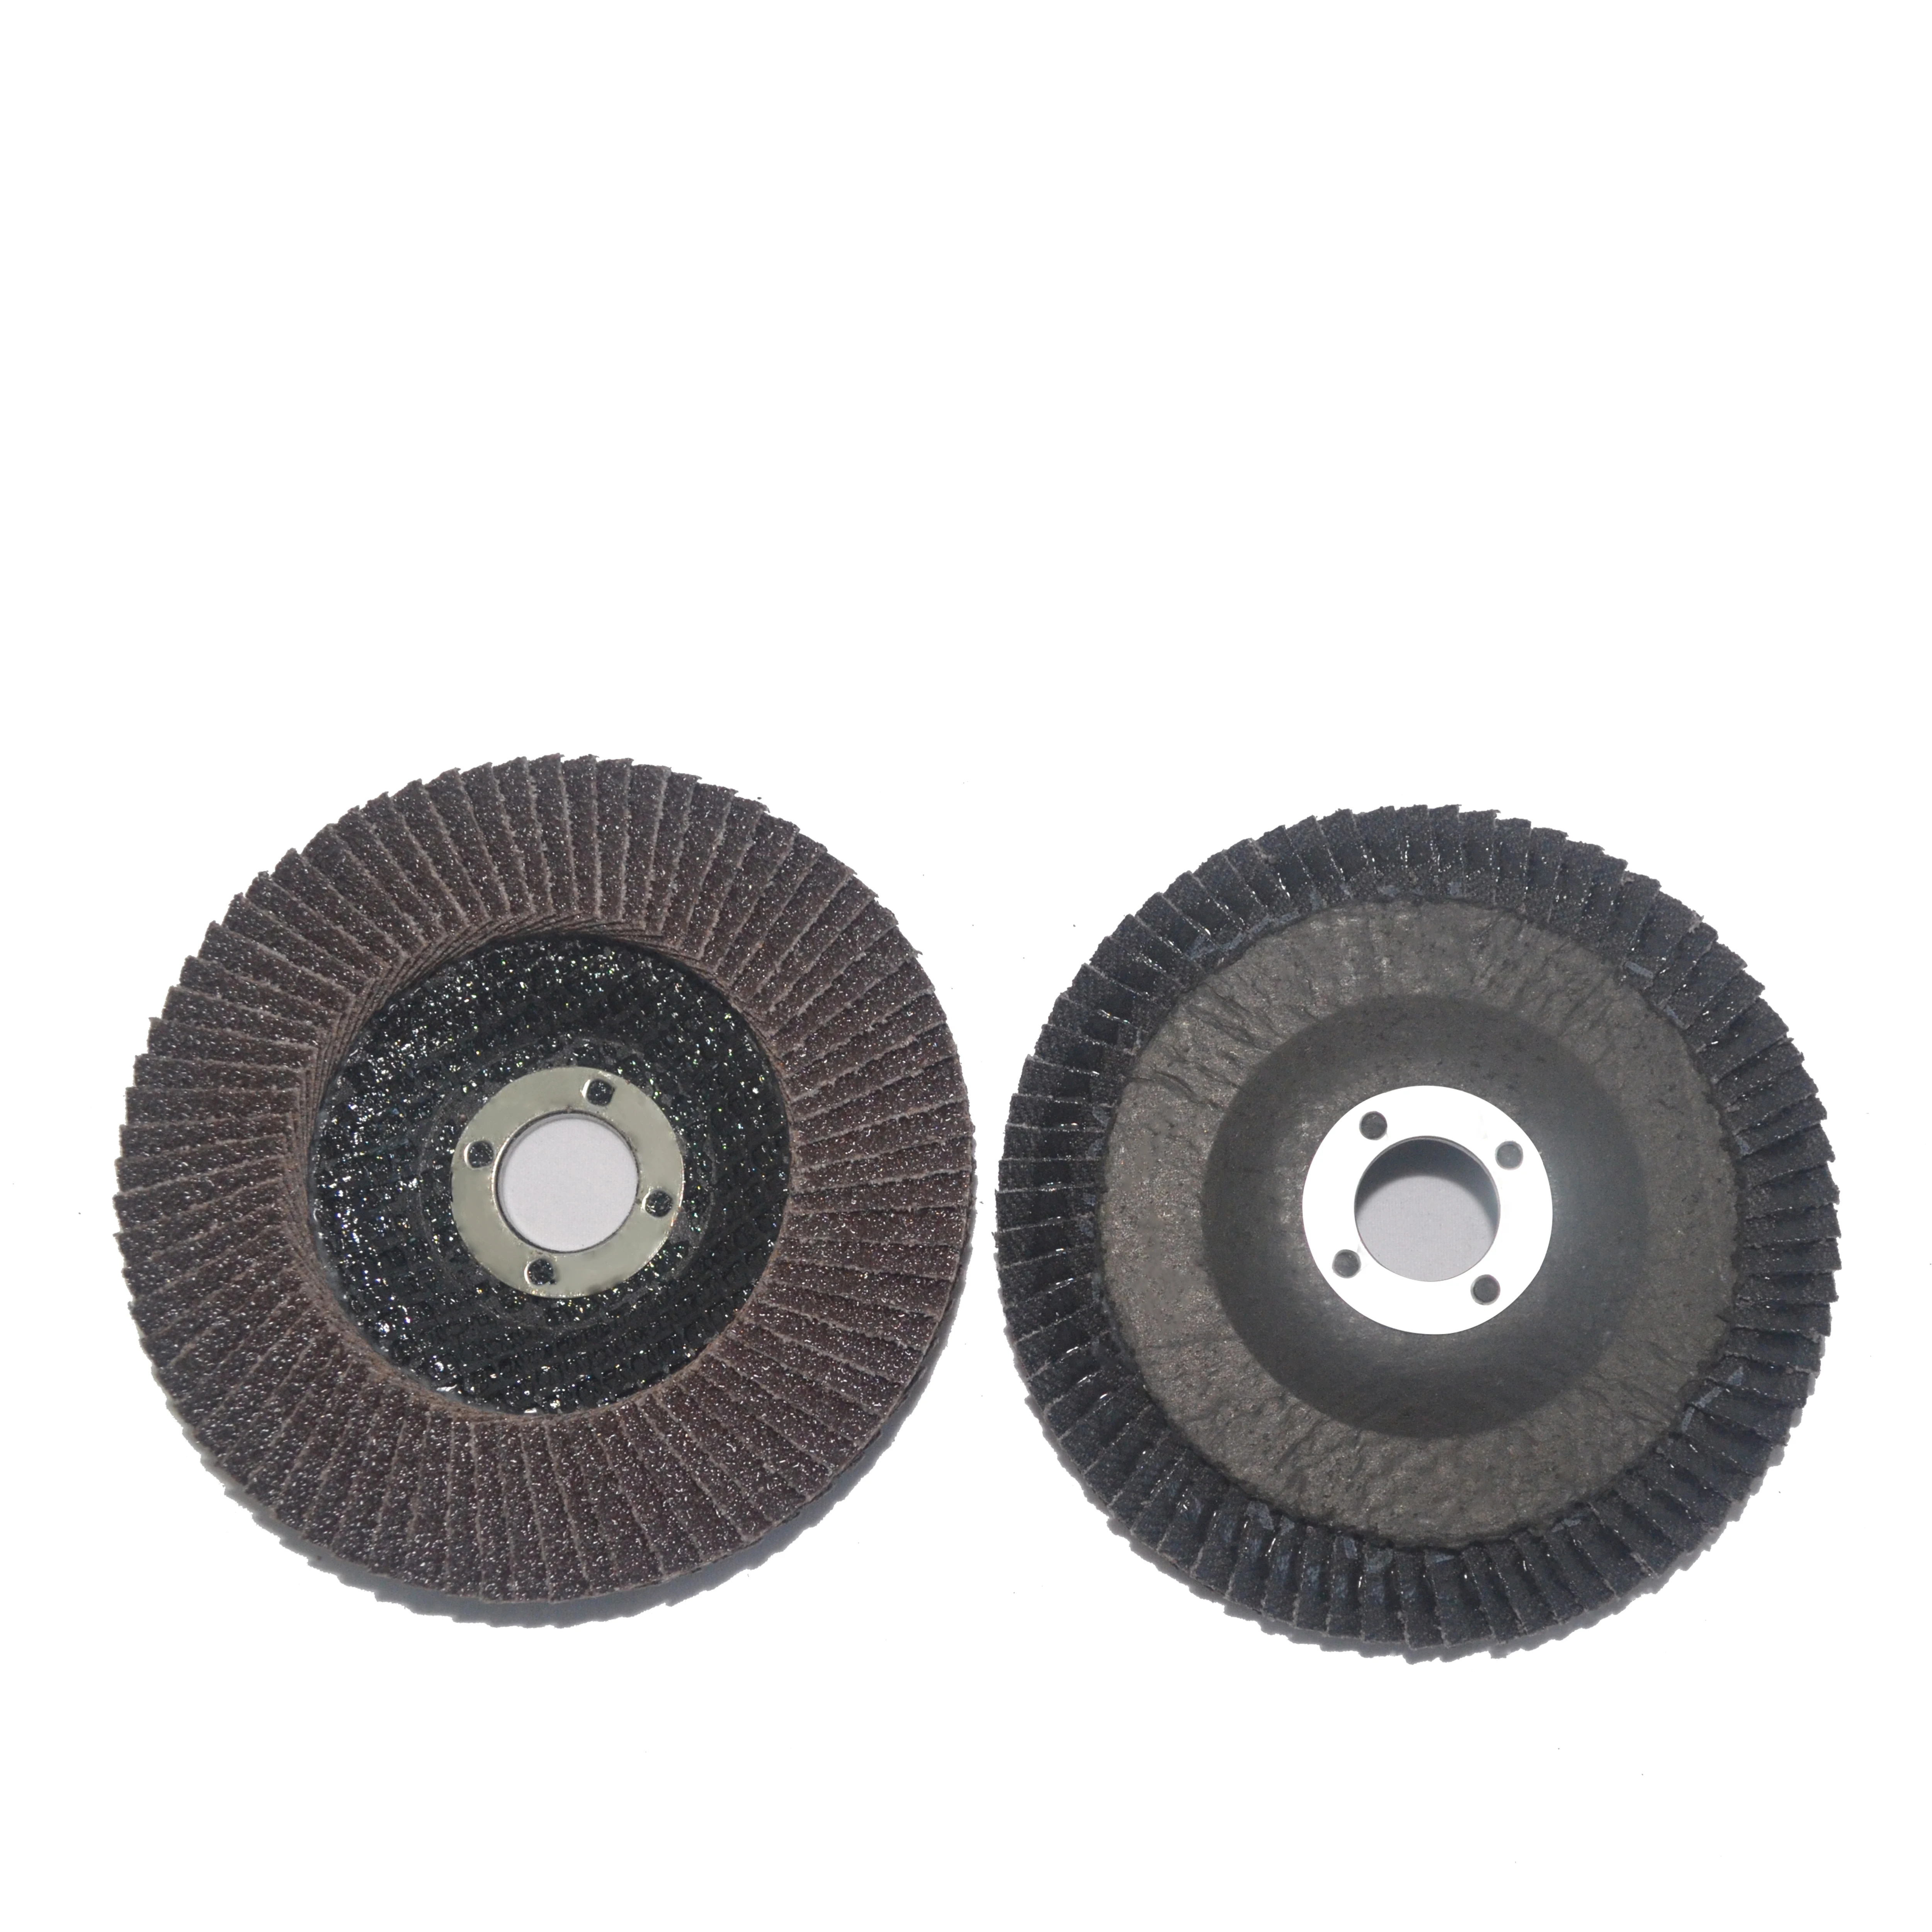 Sharpness Abrasive 4 100mm Metal Sanding Flap Discs Angle Grinder Wheels 60 Grit Buy Flap Disc Machine Flap Disc For Stainless Steel Abrasive Flap Disc Product On Alibaba Com